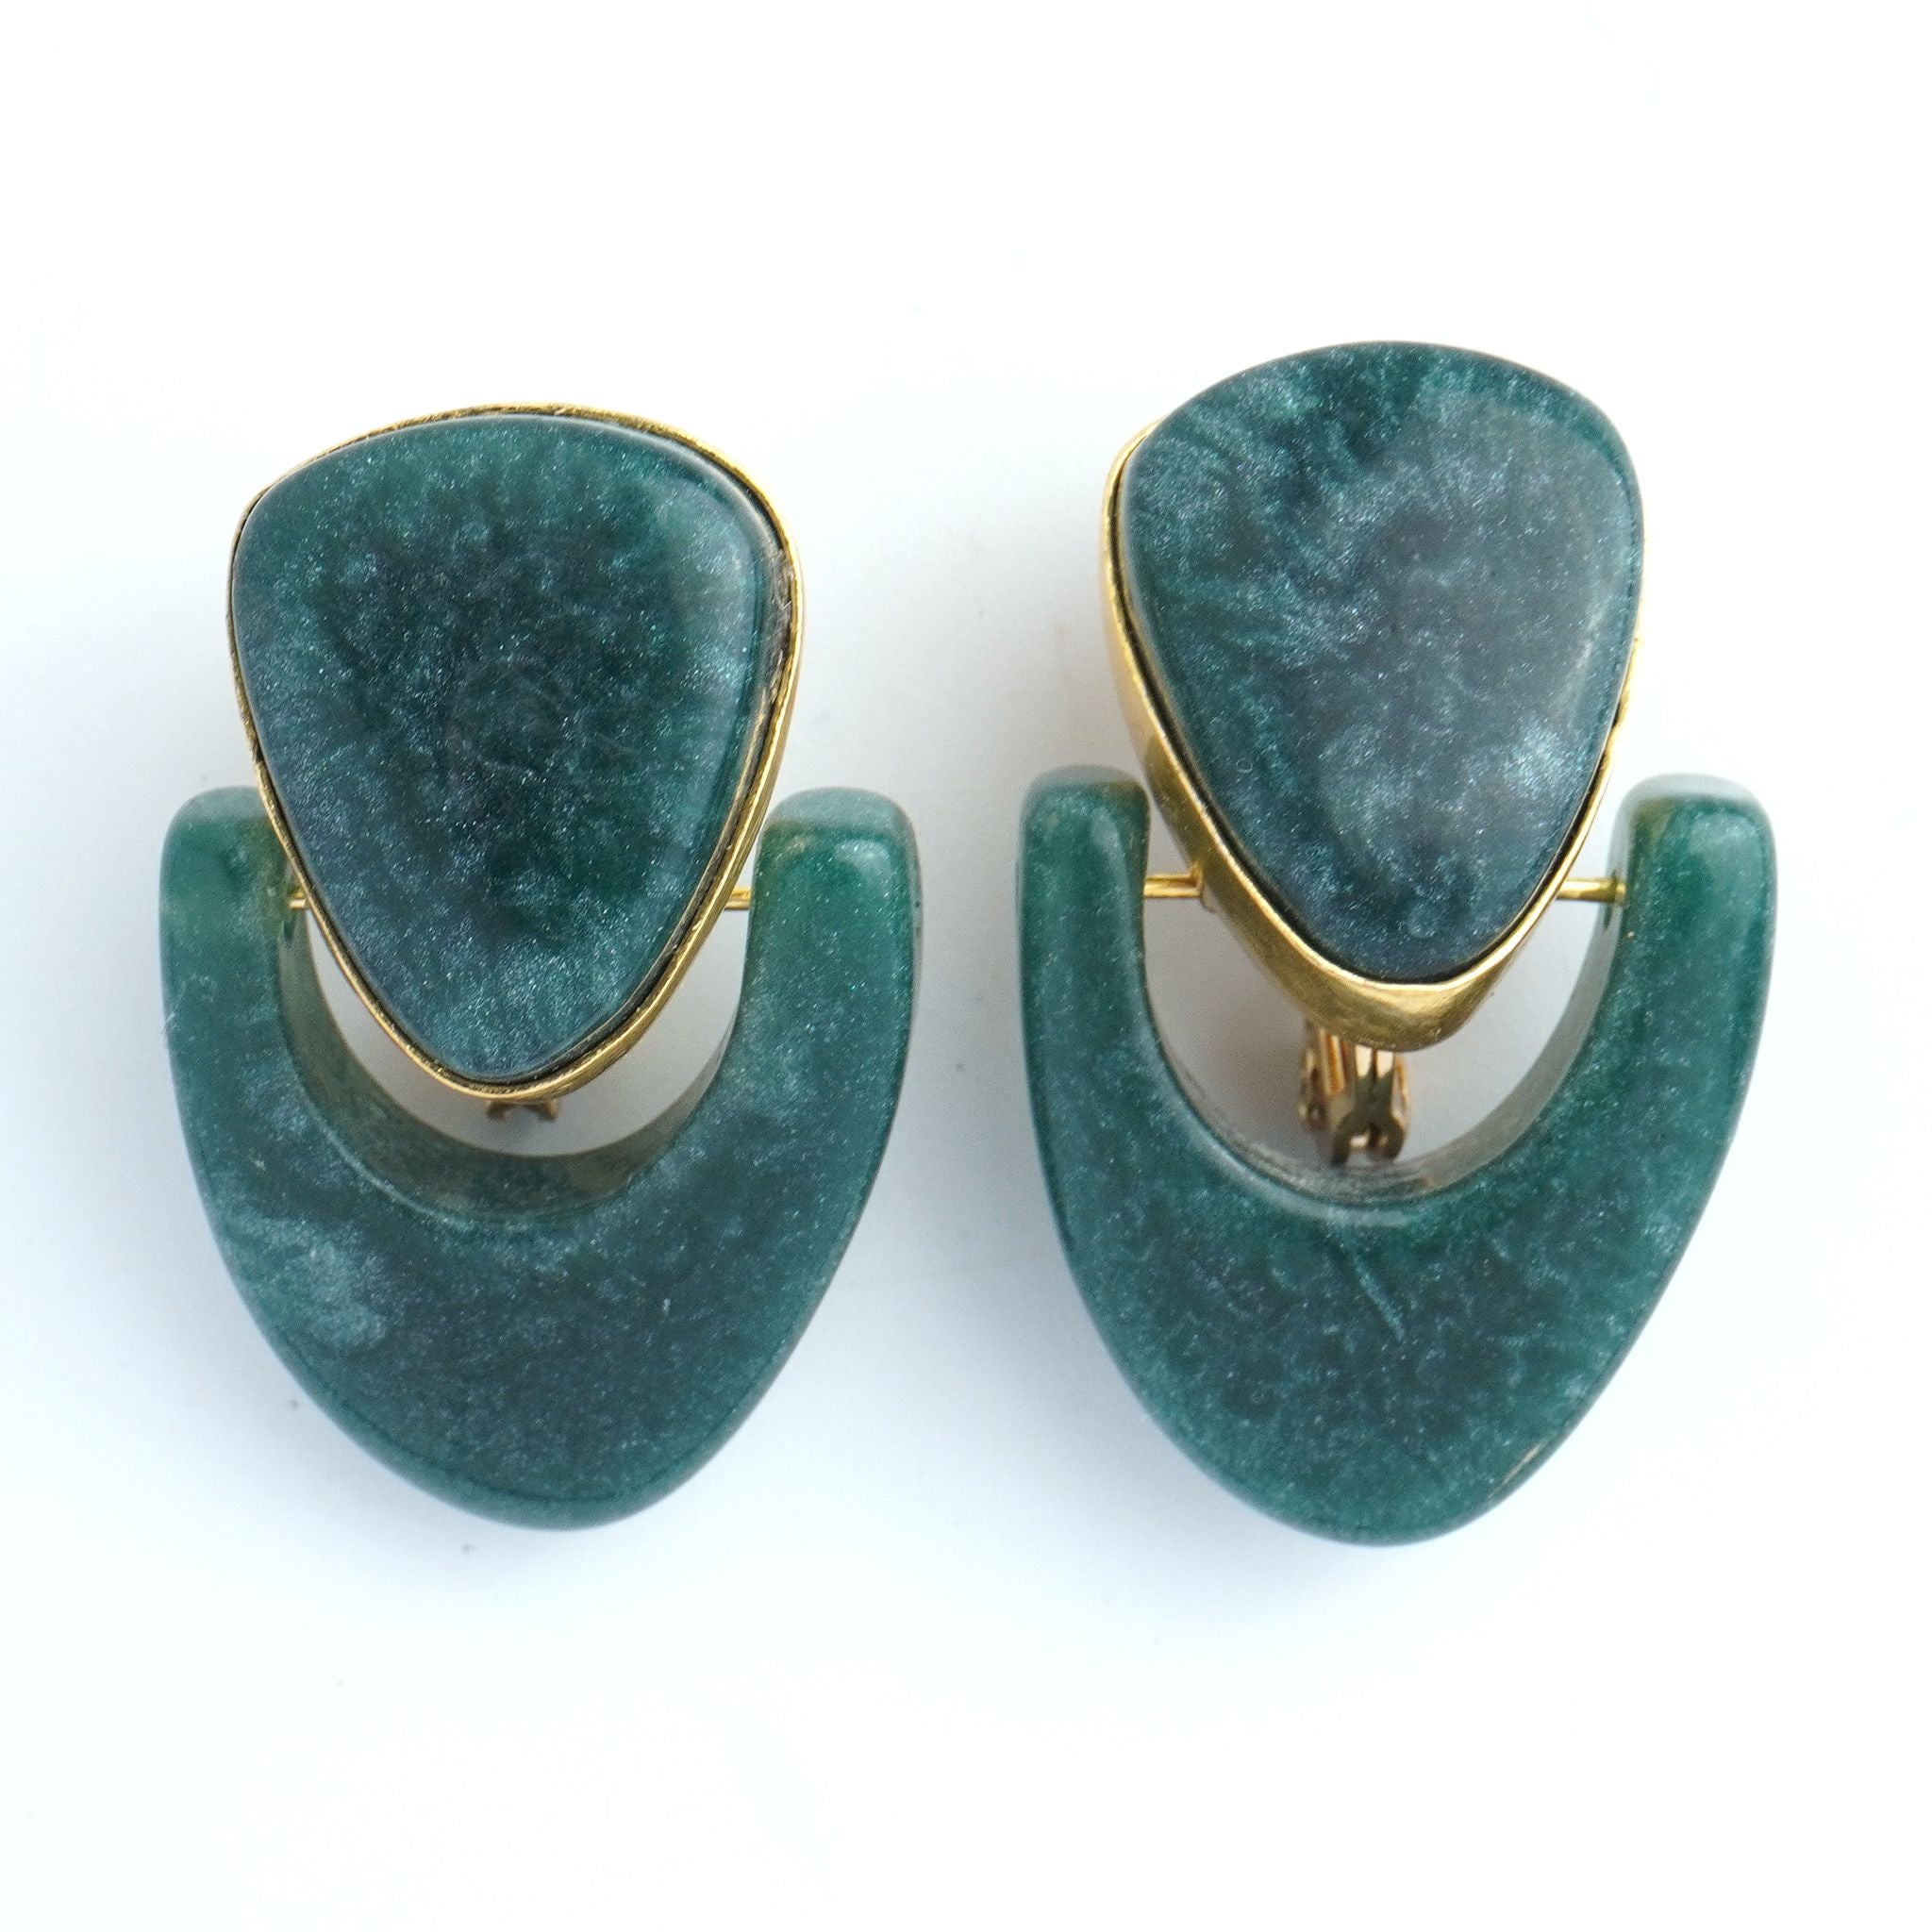 Marble motif earrings